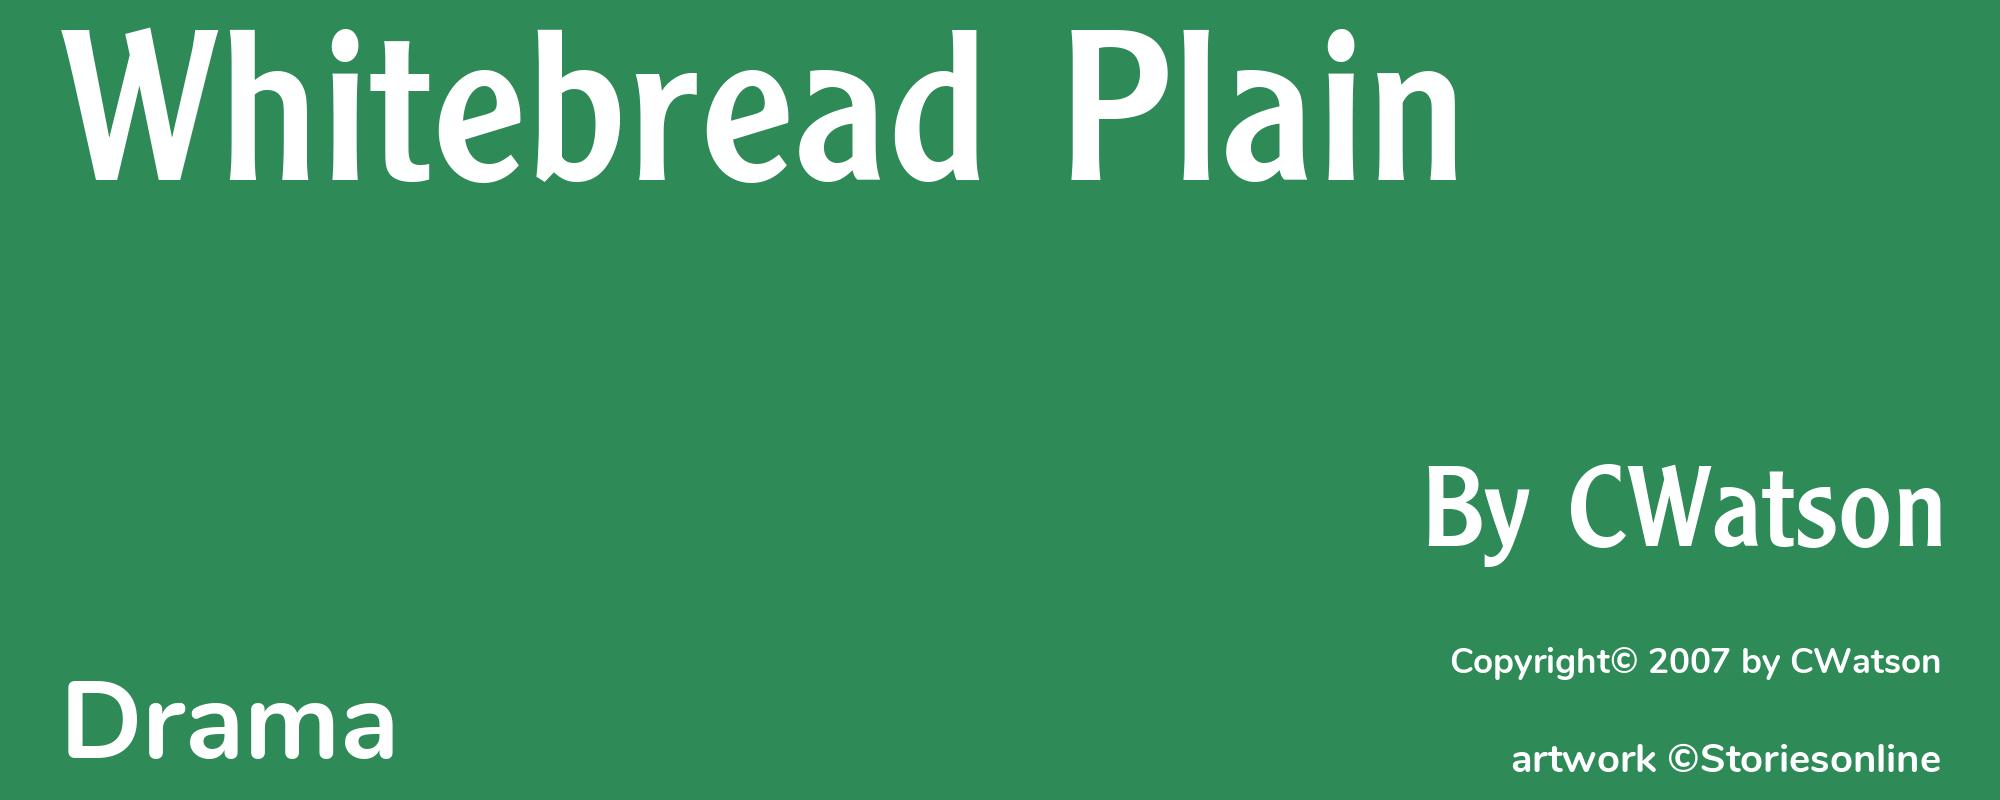 Whitebread Plain - Cover